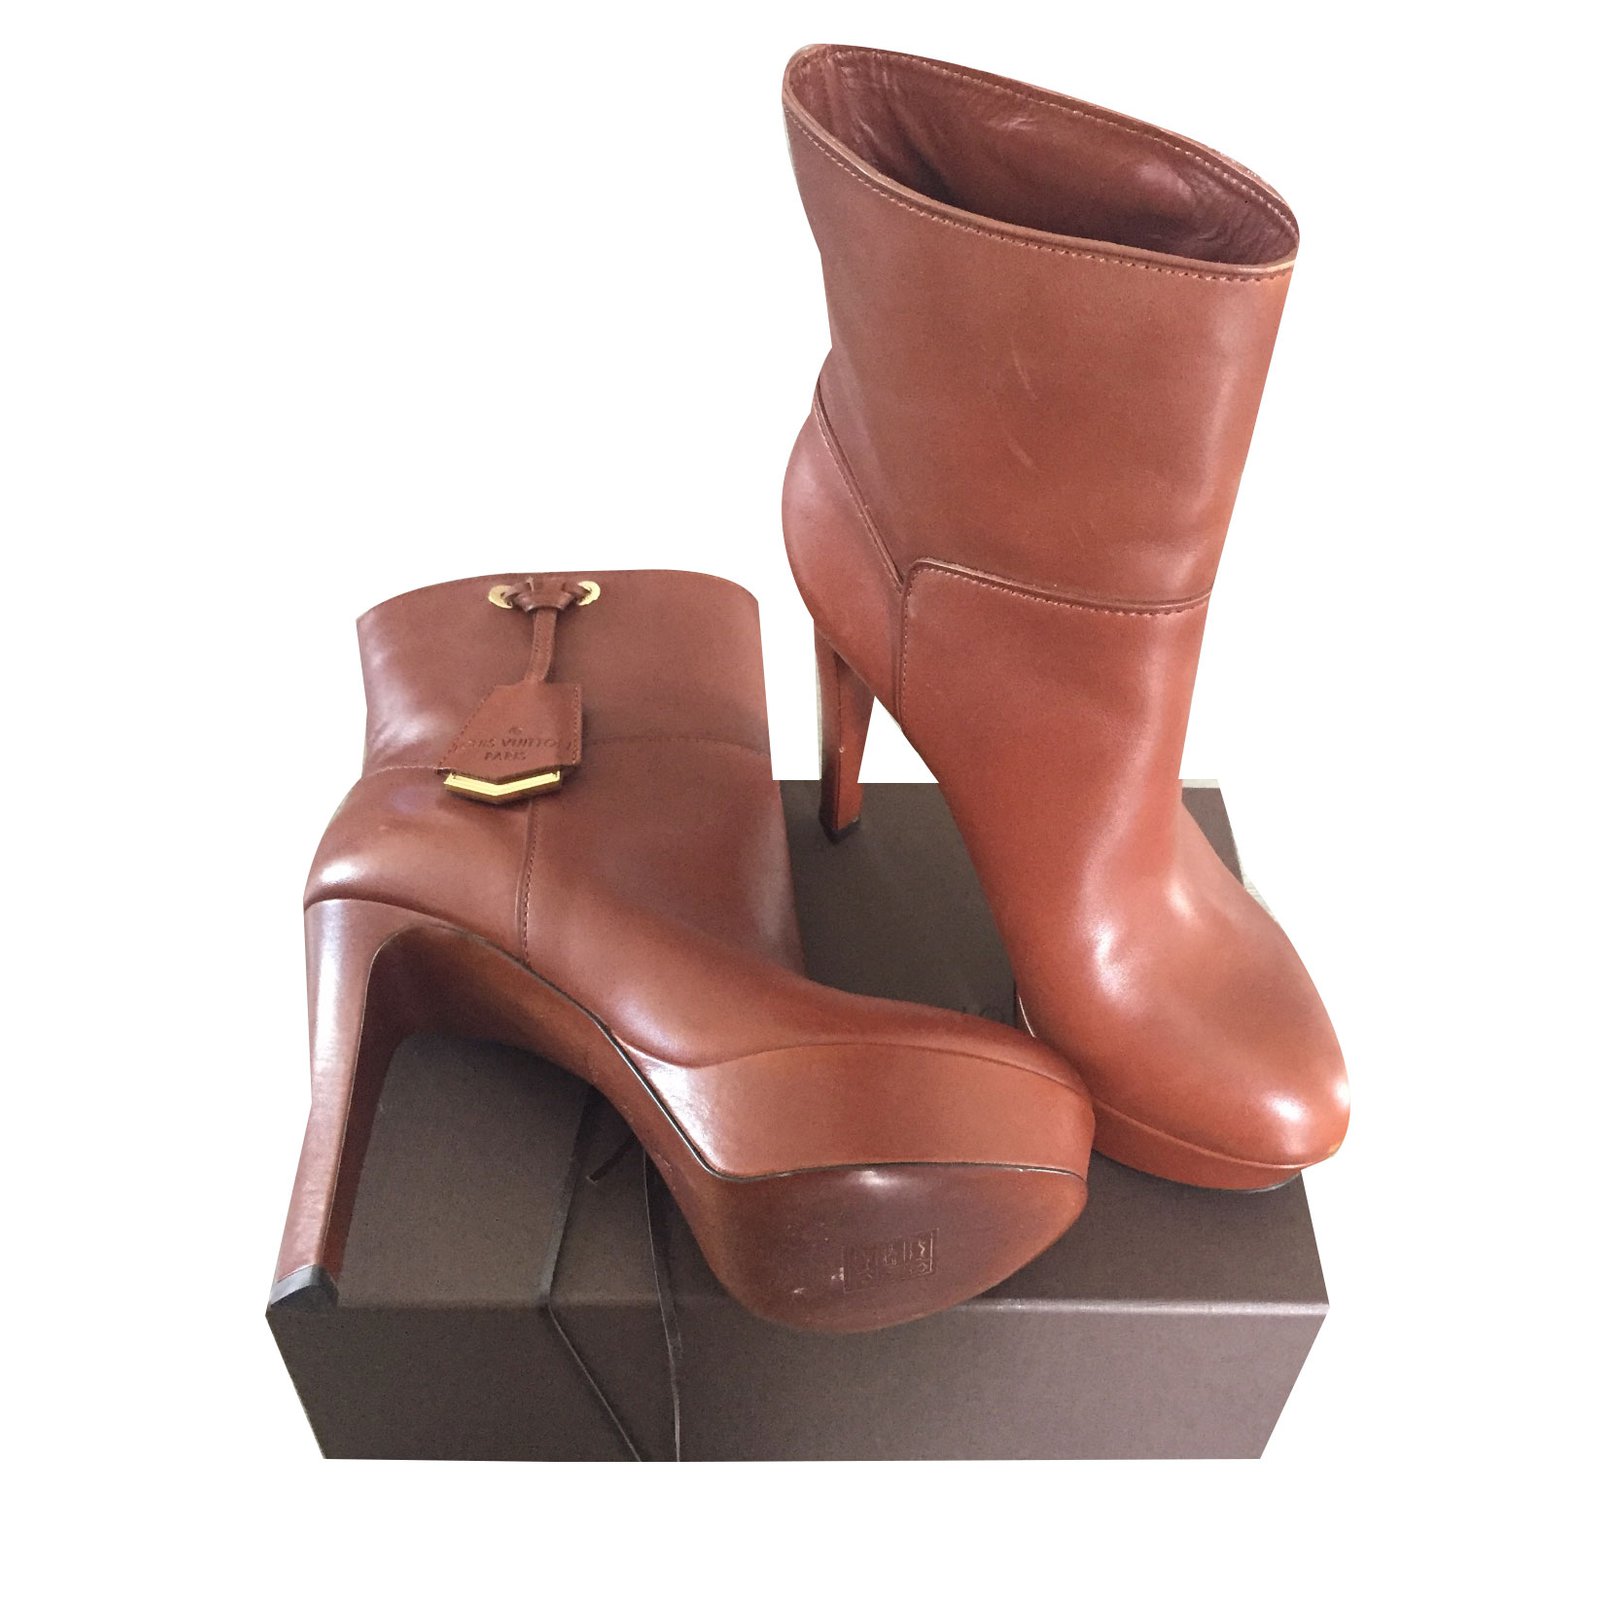 Wonderland leather buckled boots Louis Vuitton Burgundy size 38.5